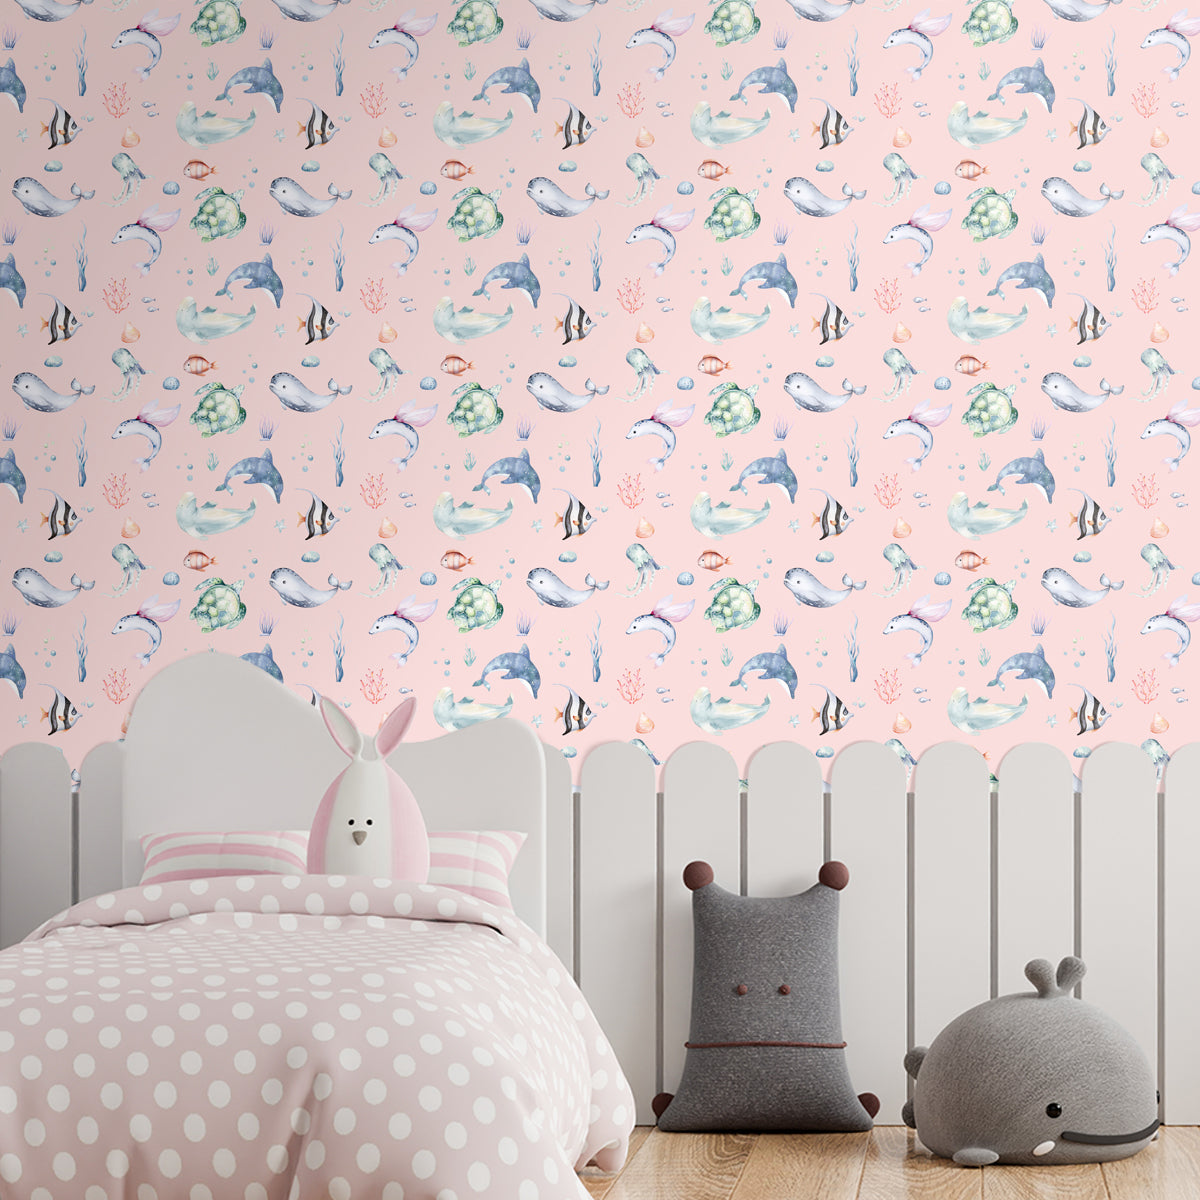 Cute Marine Life, Wallpaper Design for Kids Room, Pink